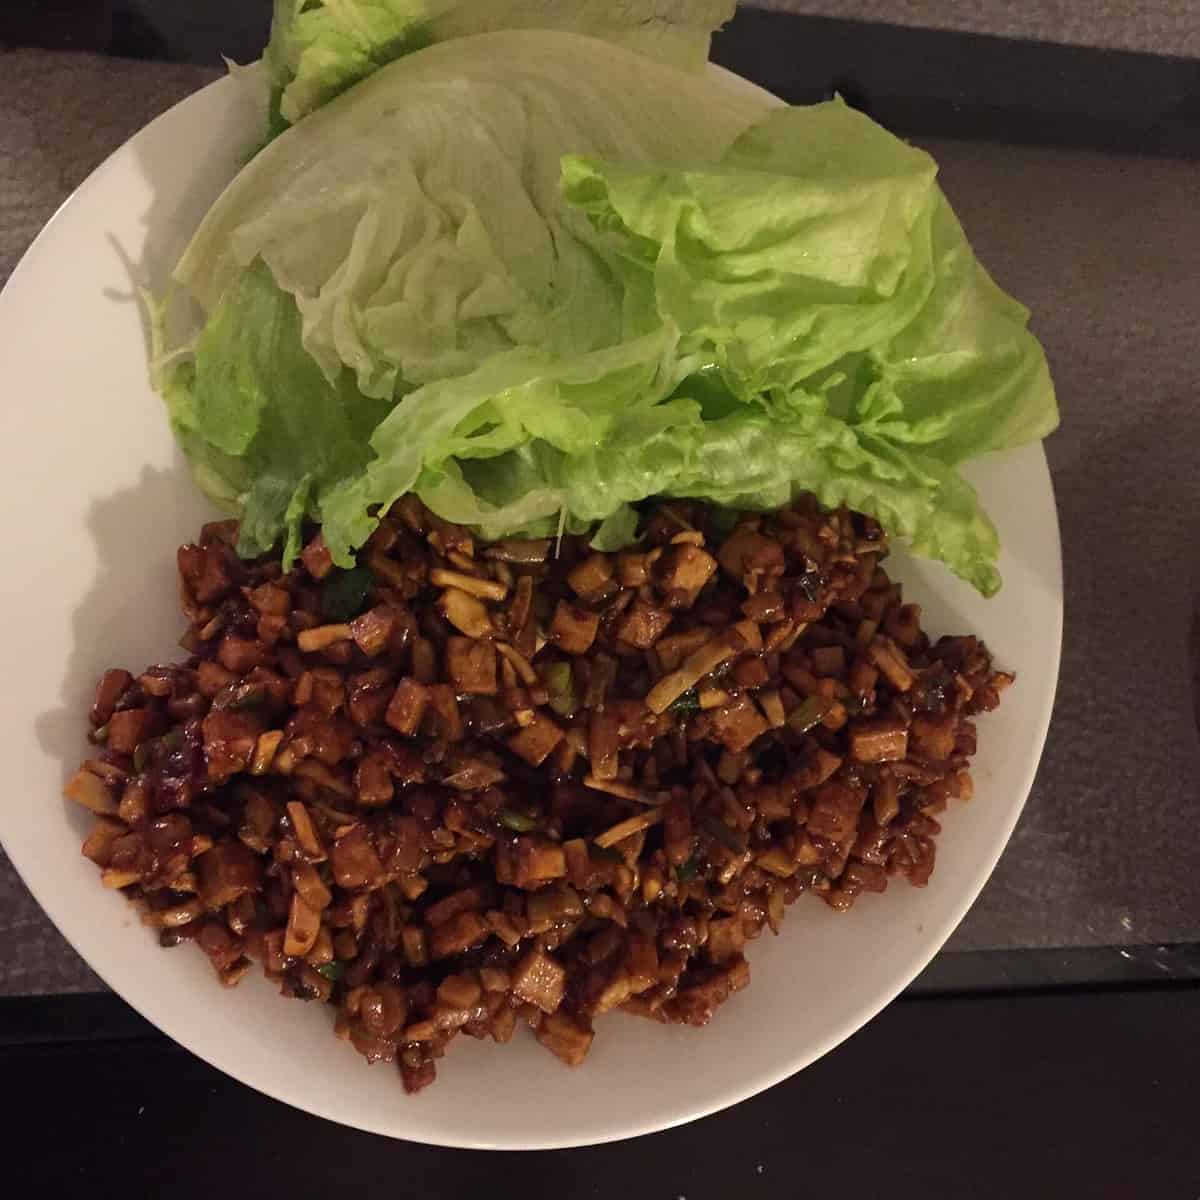 P. F. Chang's Vegetarian Lettuce Wraps